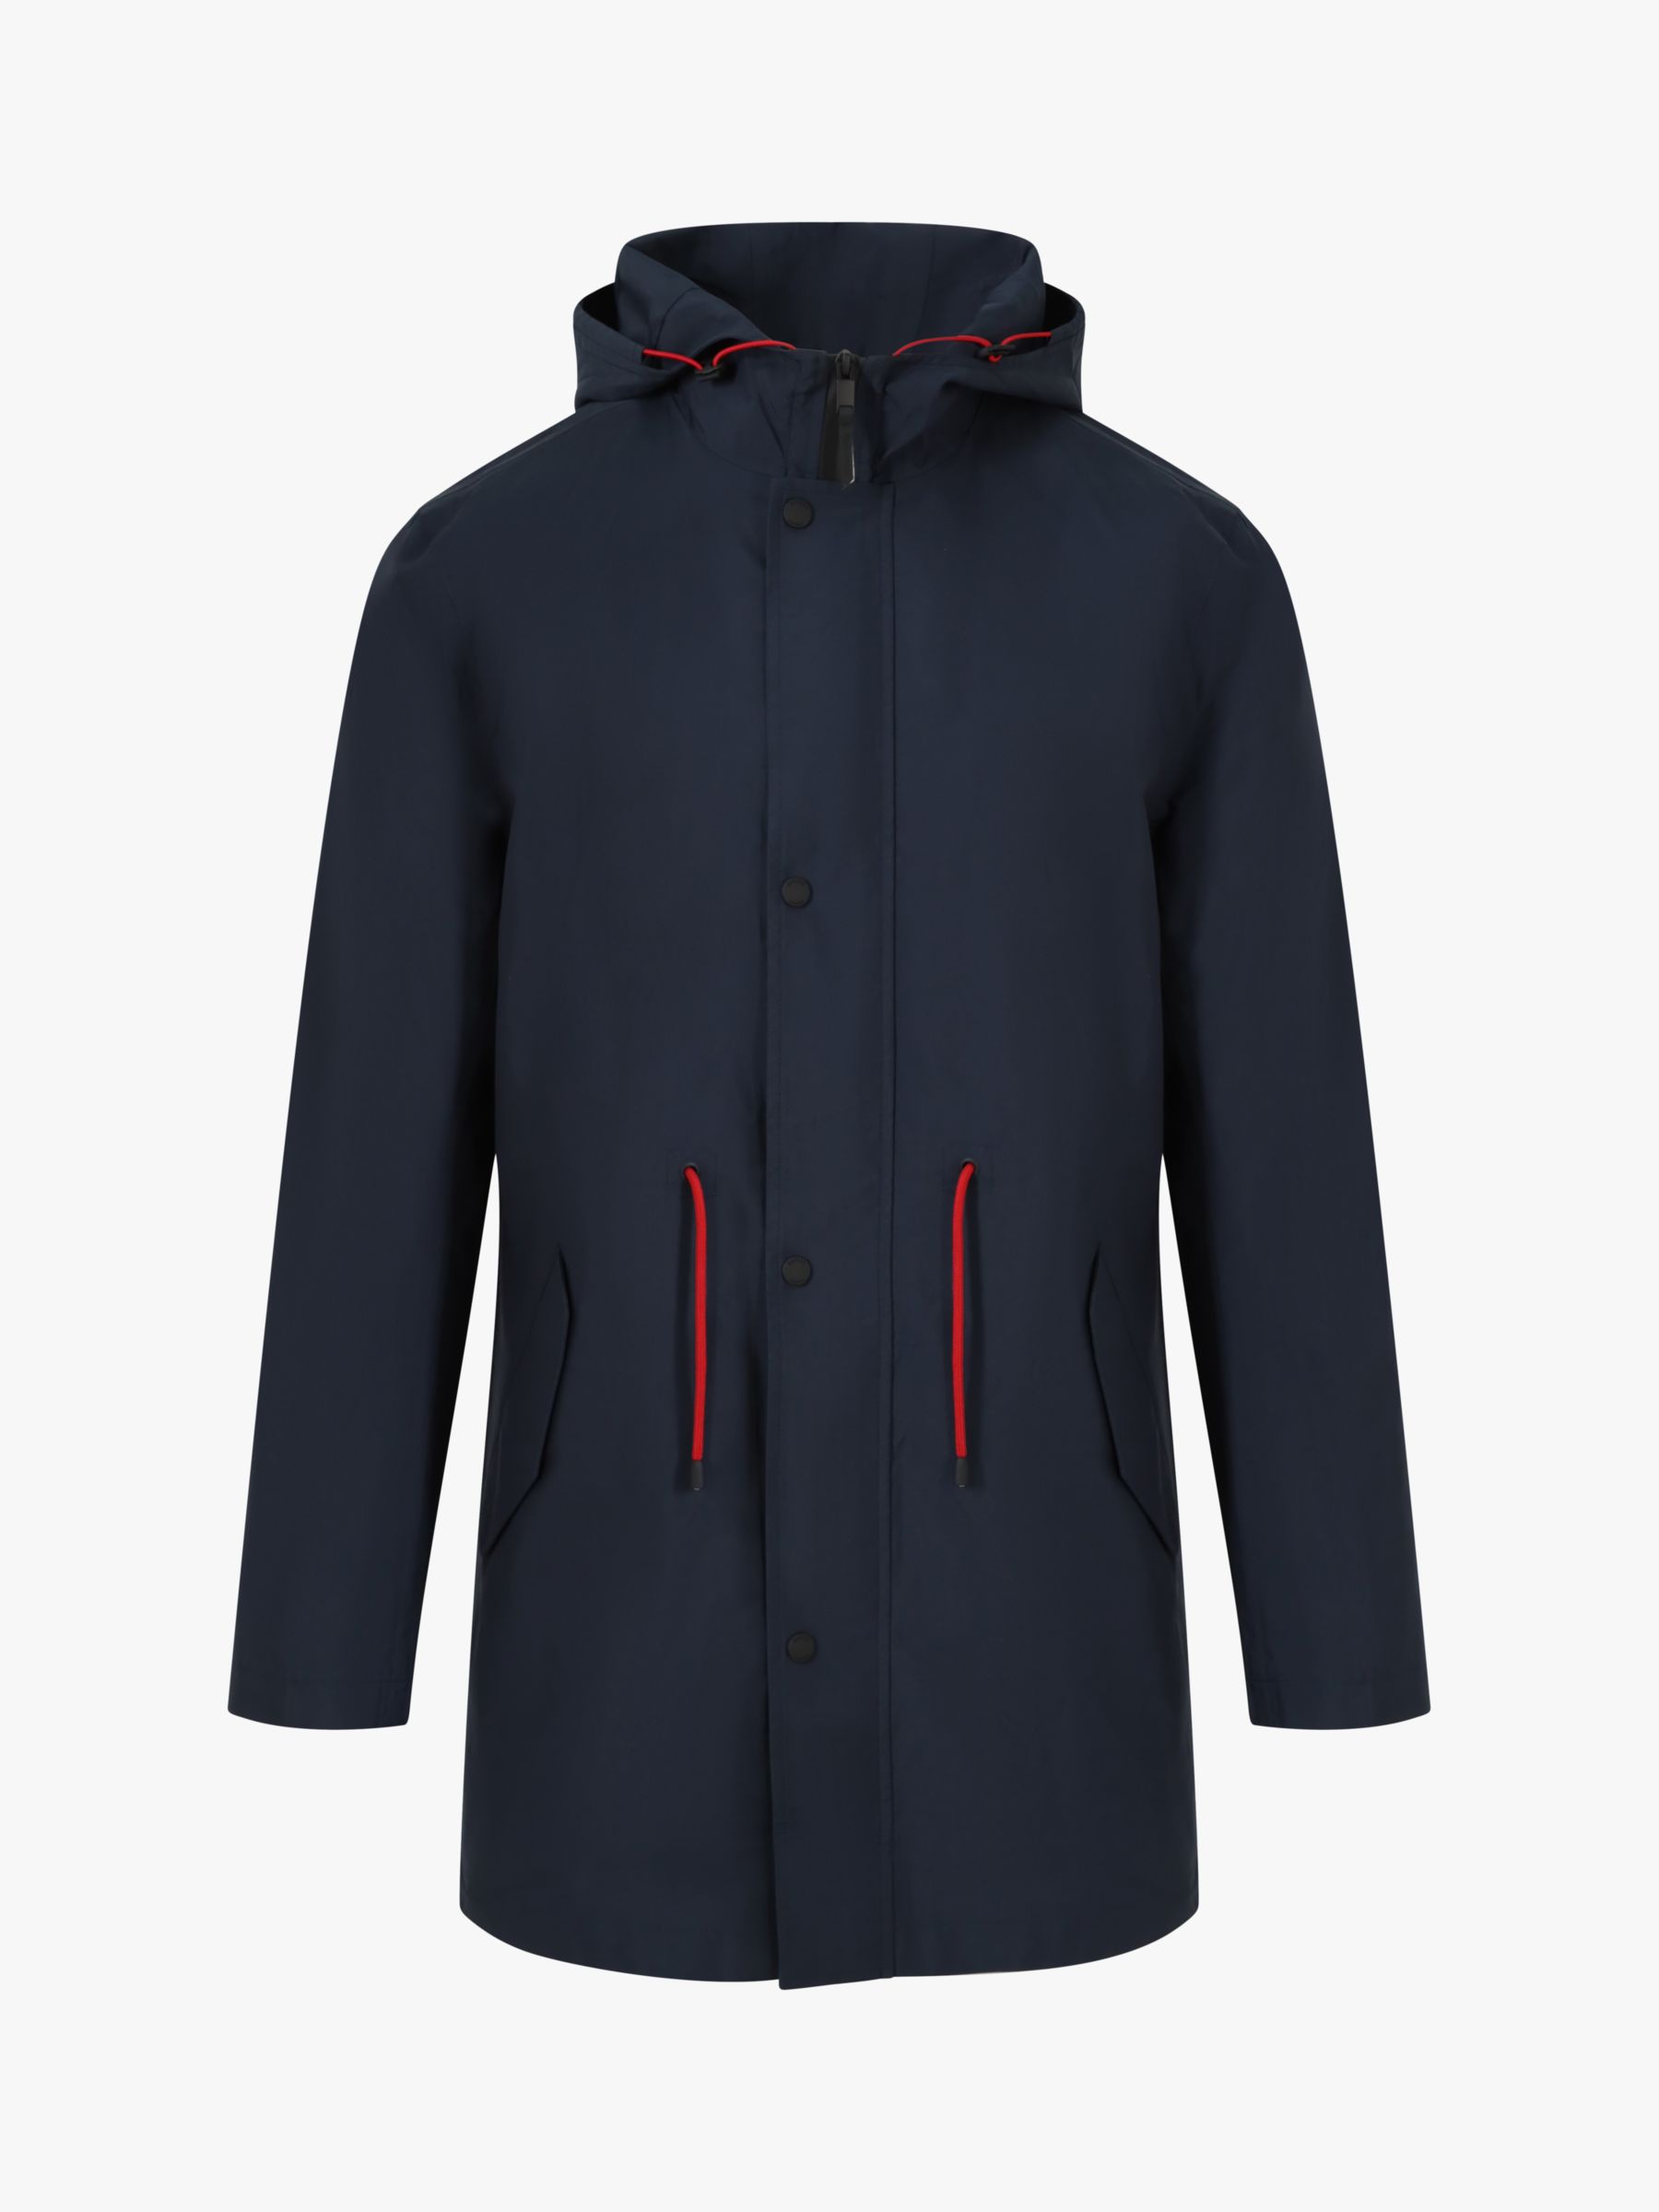 Guards London Filey Waterproof Lightweight Raincoat, Navy, 44R